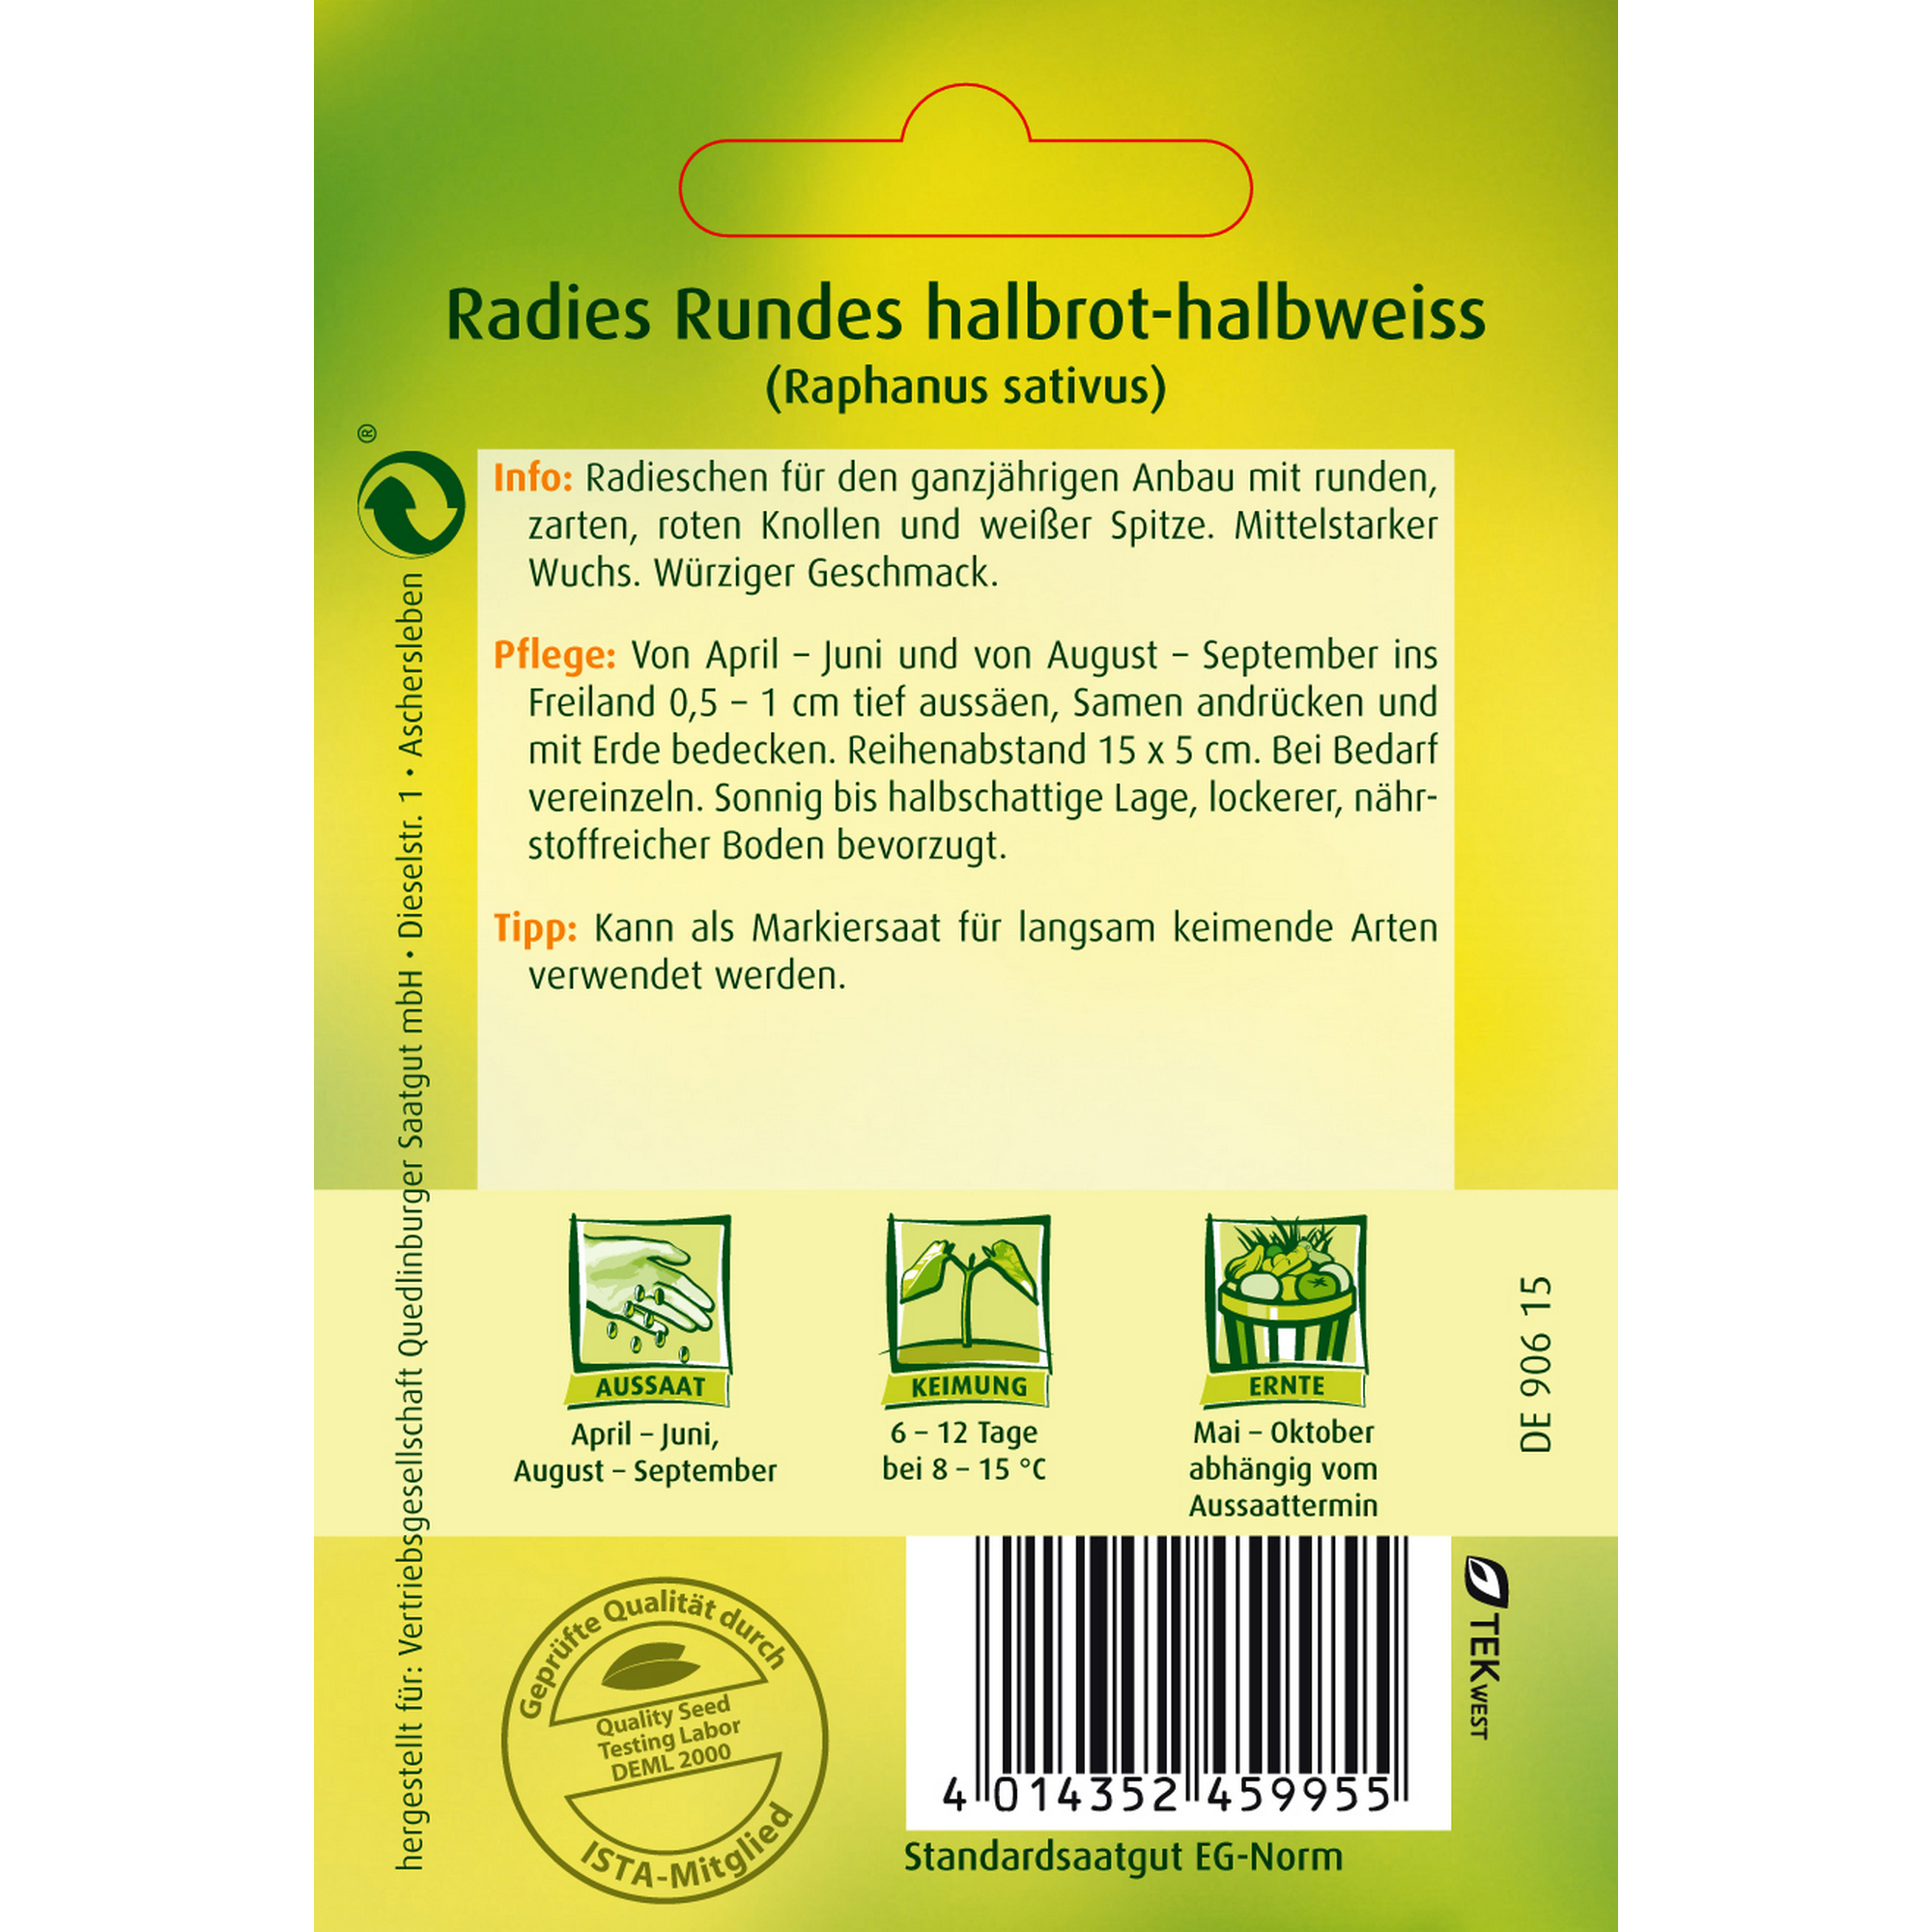 Radies 'Rundes halbrot-halbweiss' + product picture